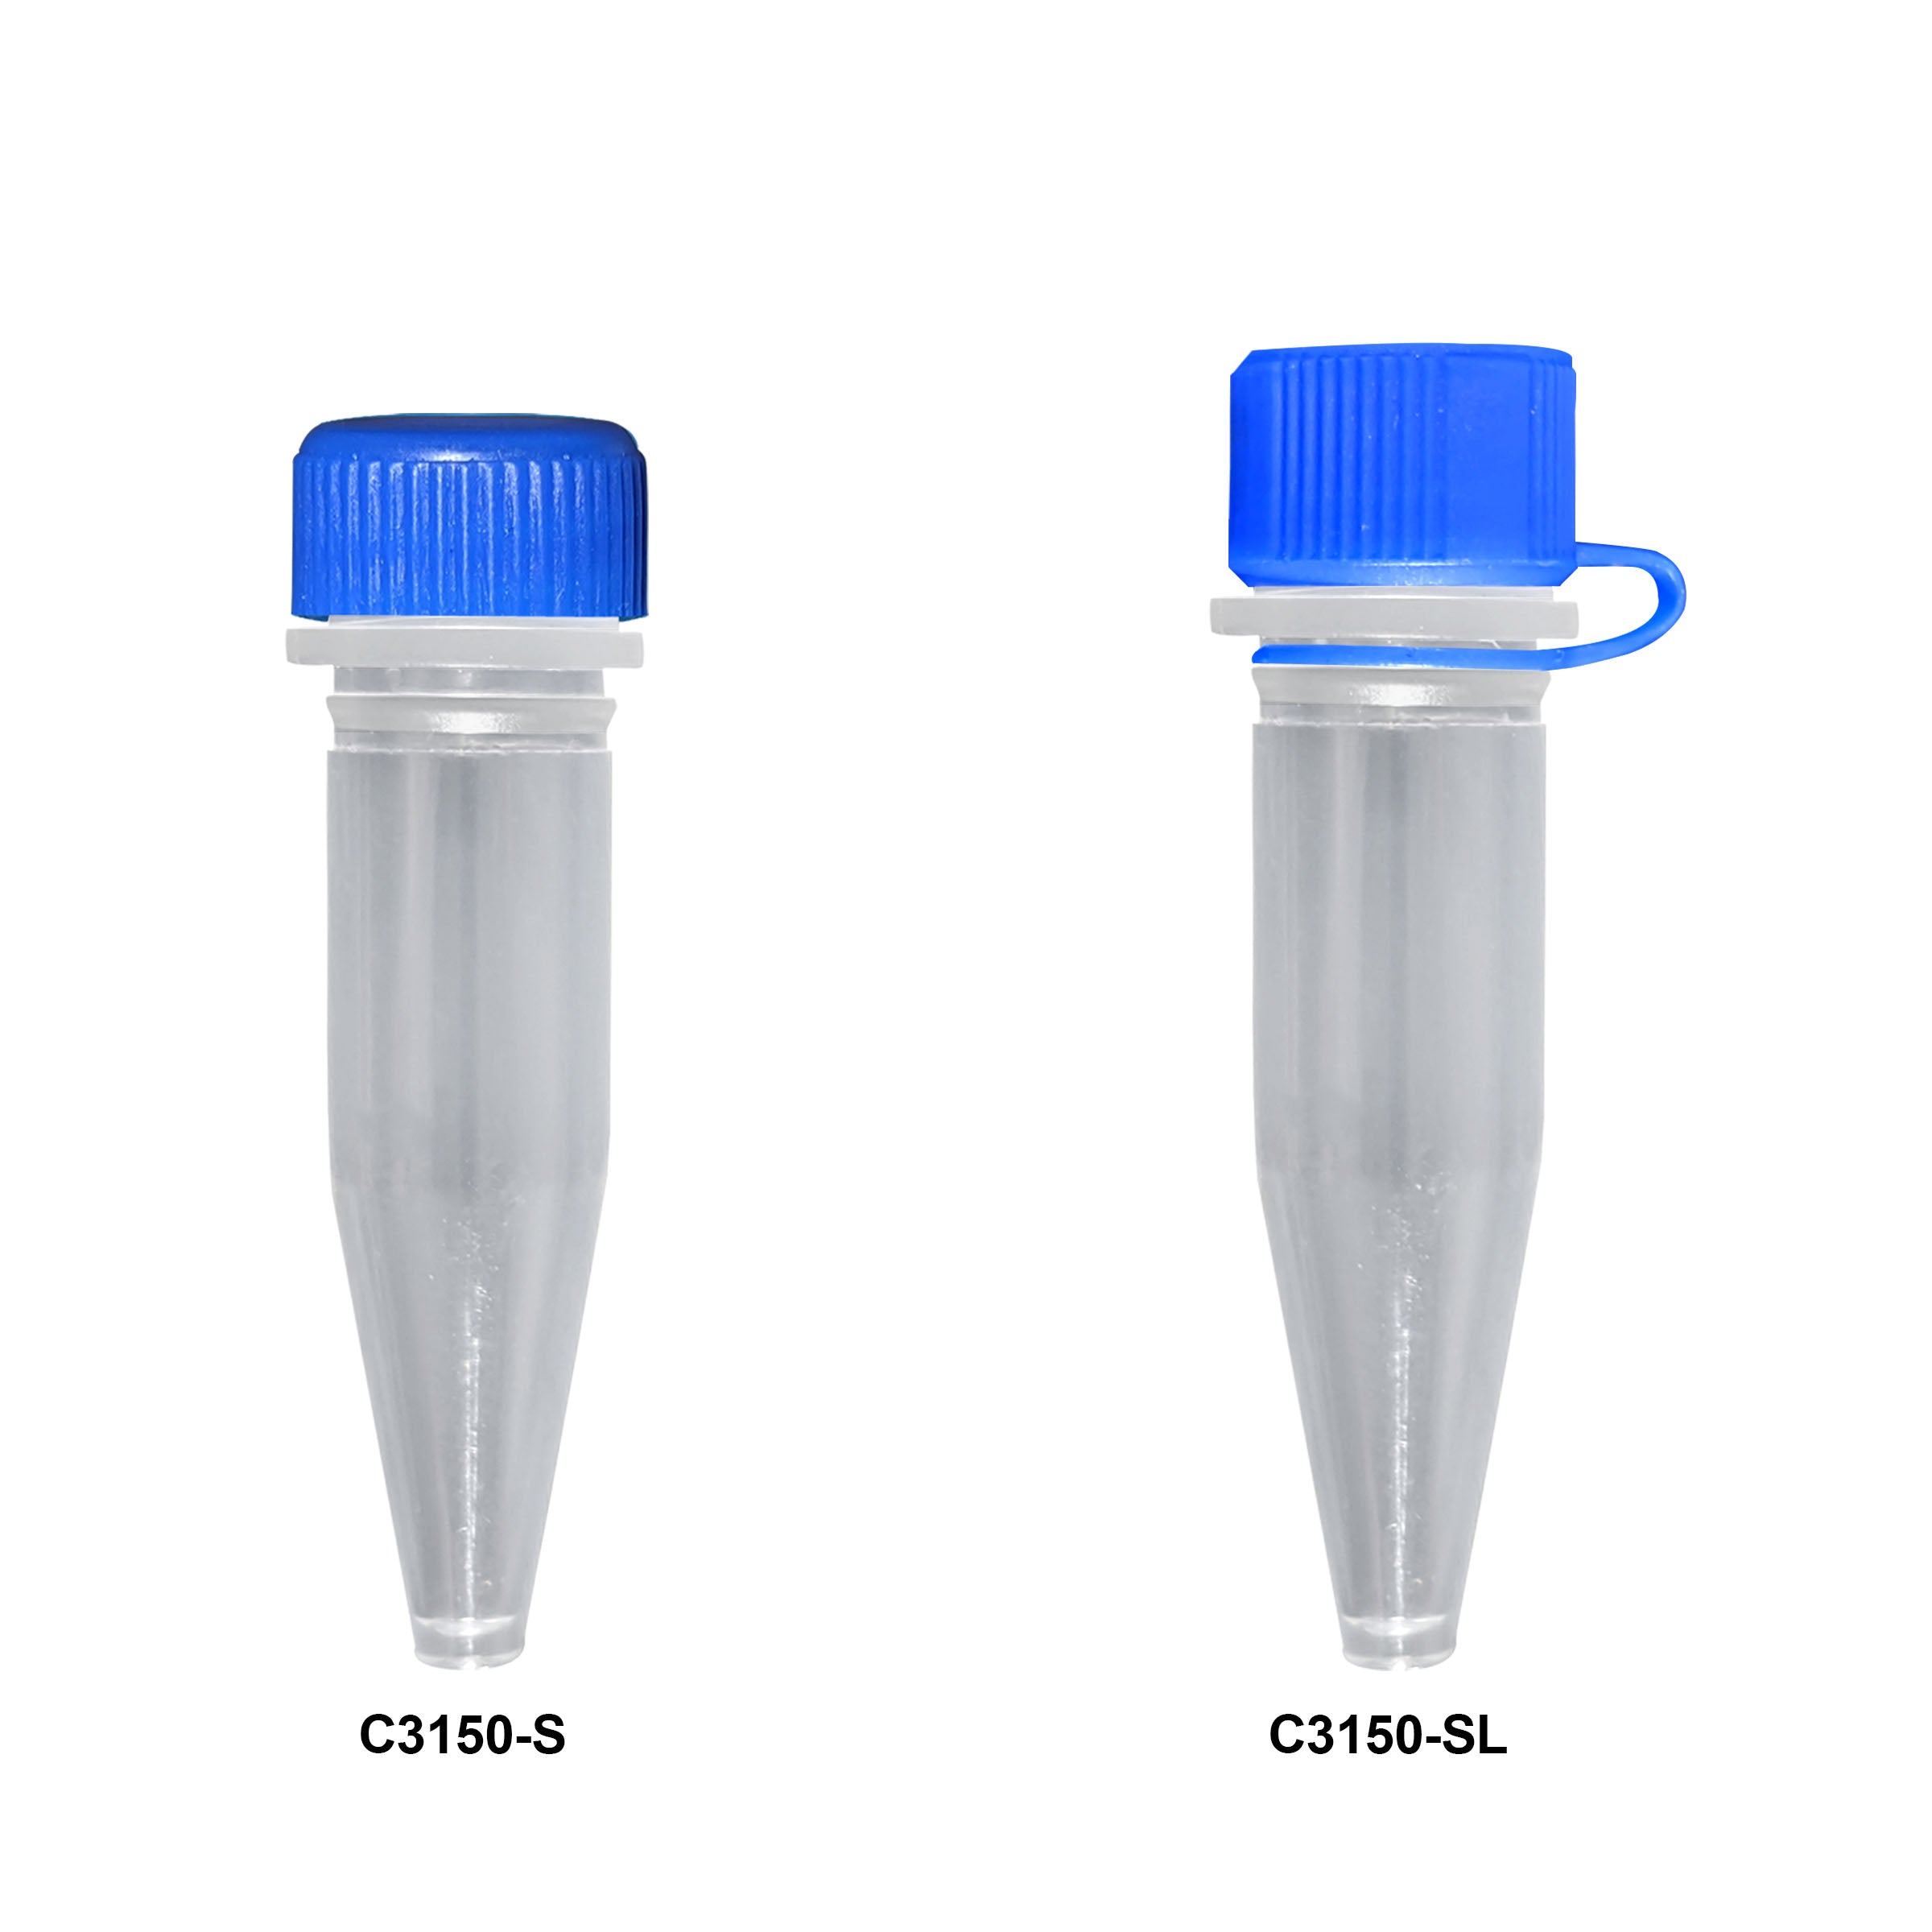 MTC Bio C3150-S, Screw-Cap 1.5ml Microtube, 10 Bags of 100 Tubes, 1000/cs